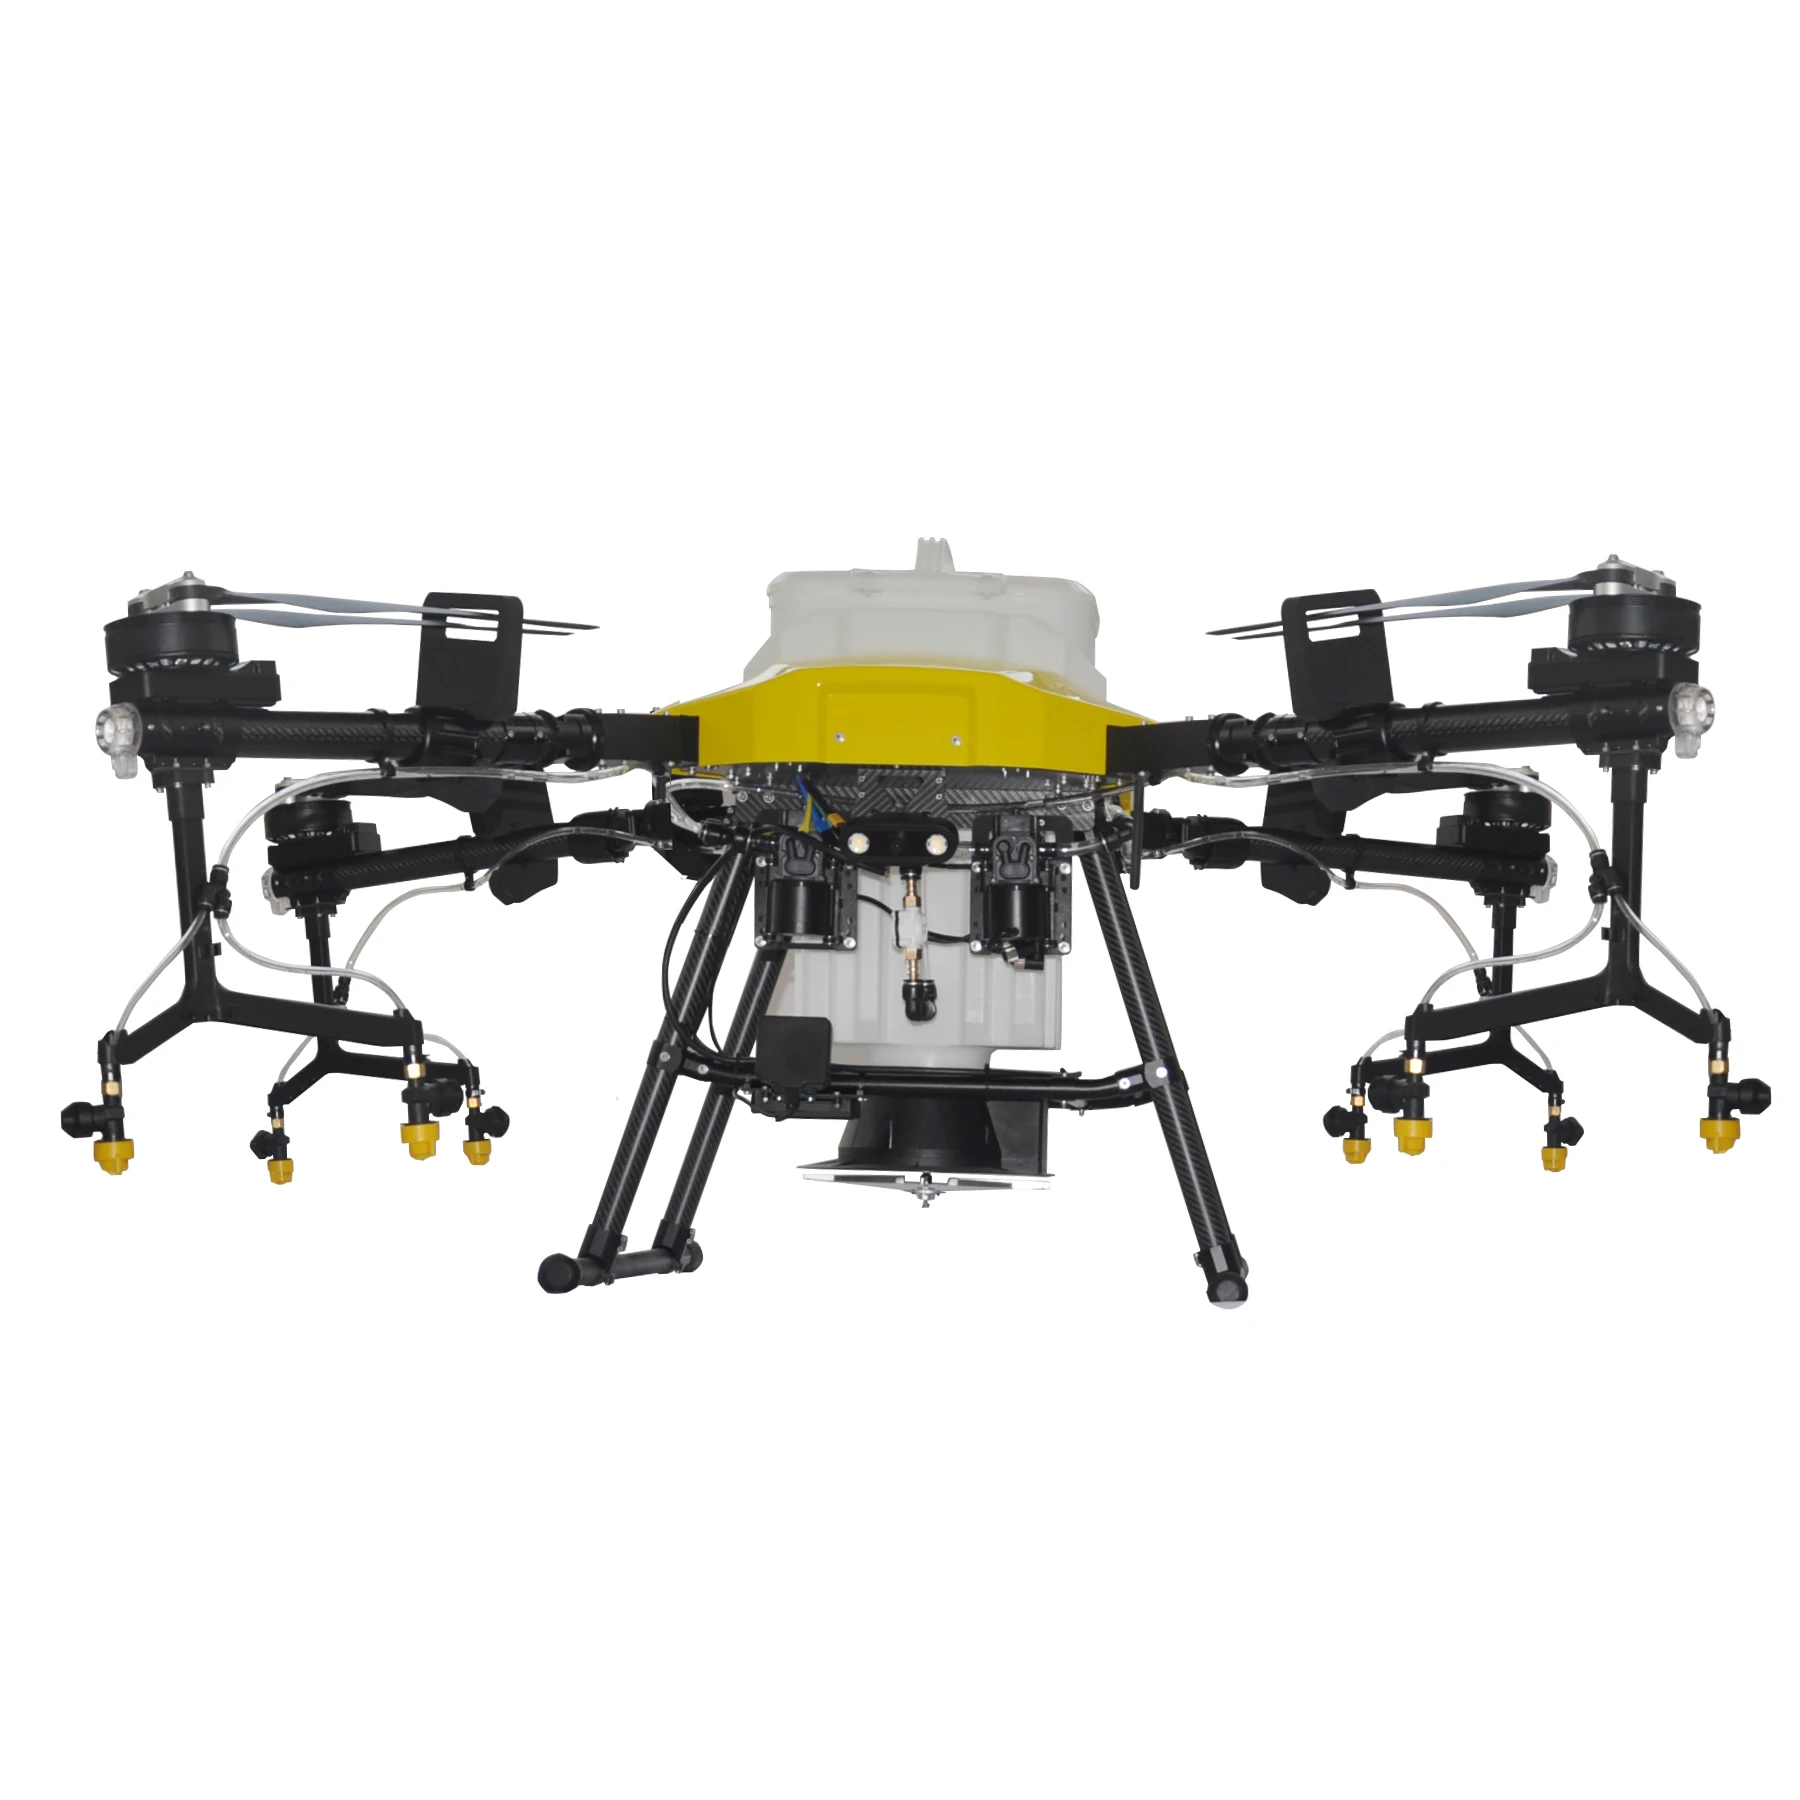 

16L smart pesticides drones agriculture spraying sprayer uav drone with camera hd FPV drone for farming sprayer